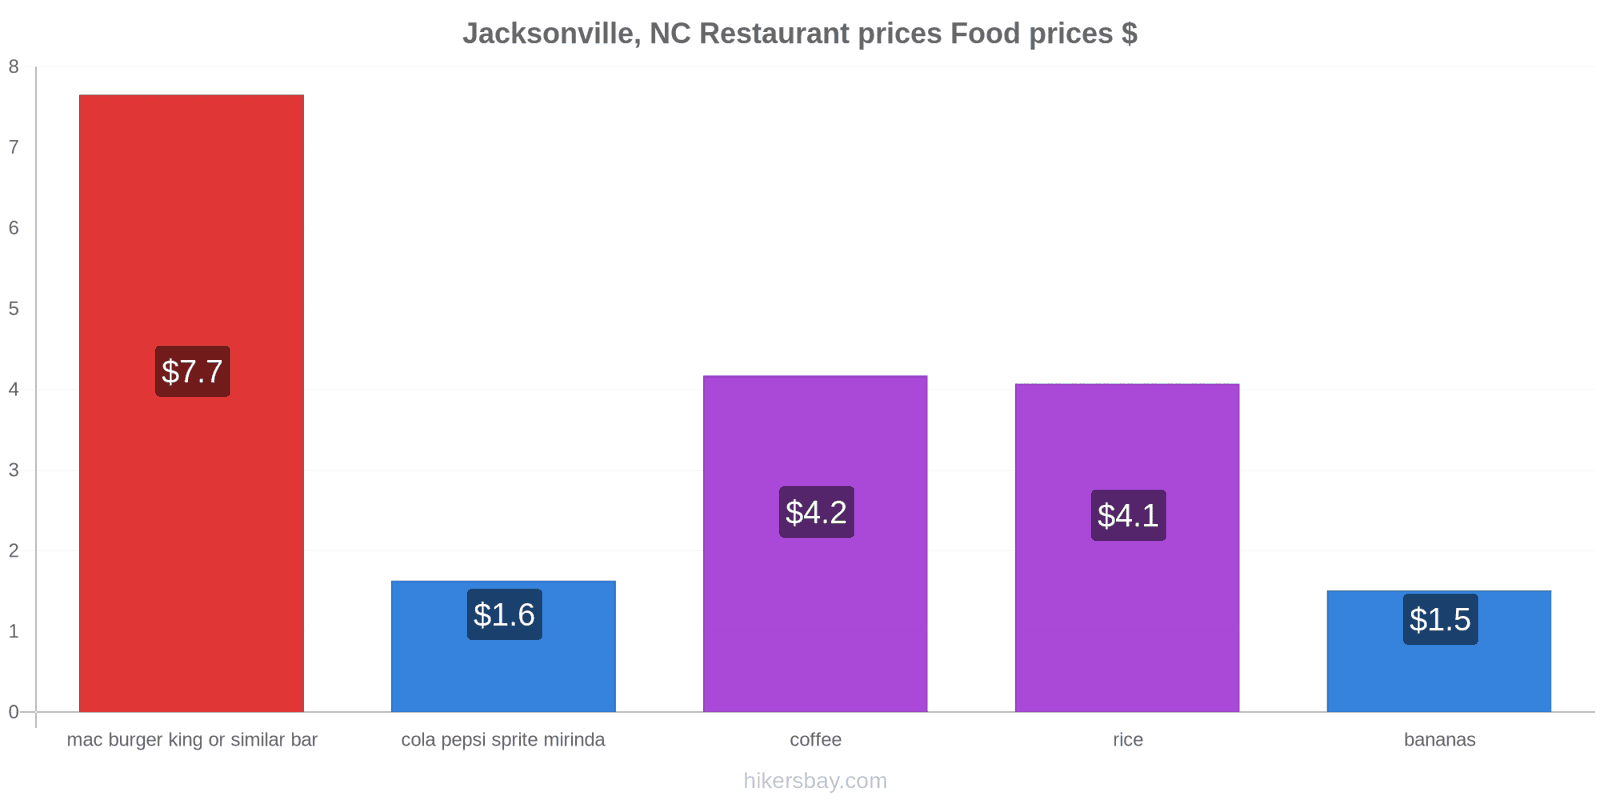 Jacksonville, NC price changes hikersbay.com